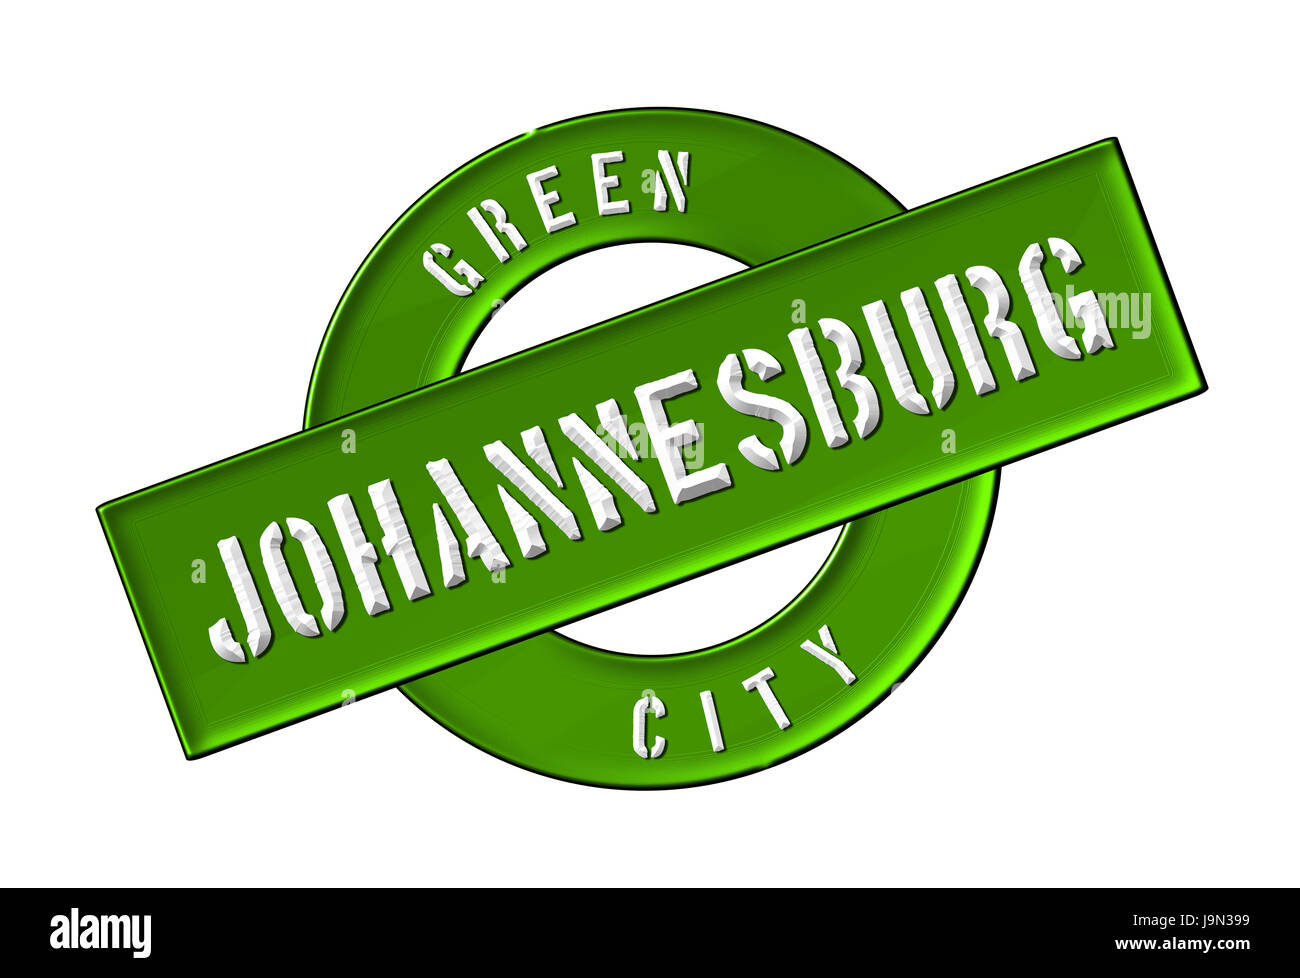 grüne Stadt johannesburg Stockfoto